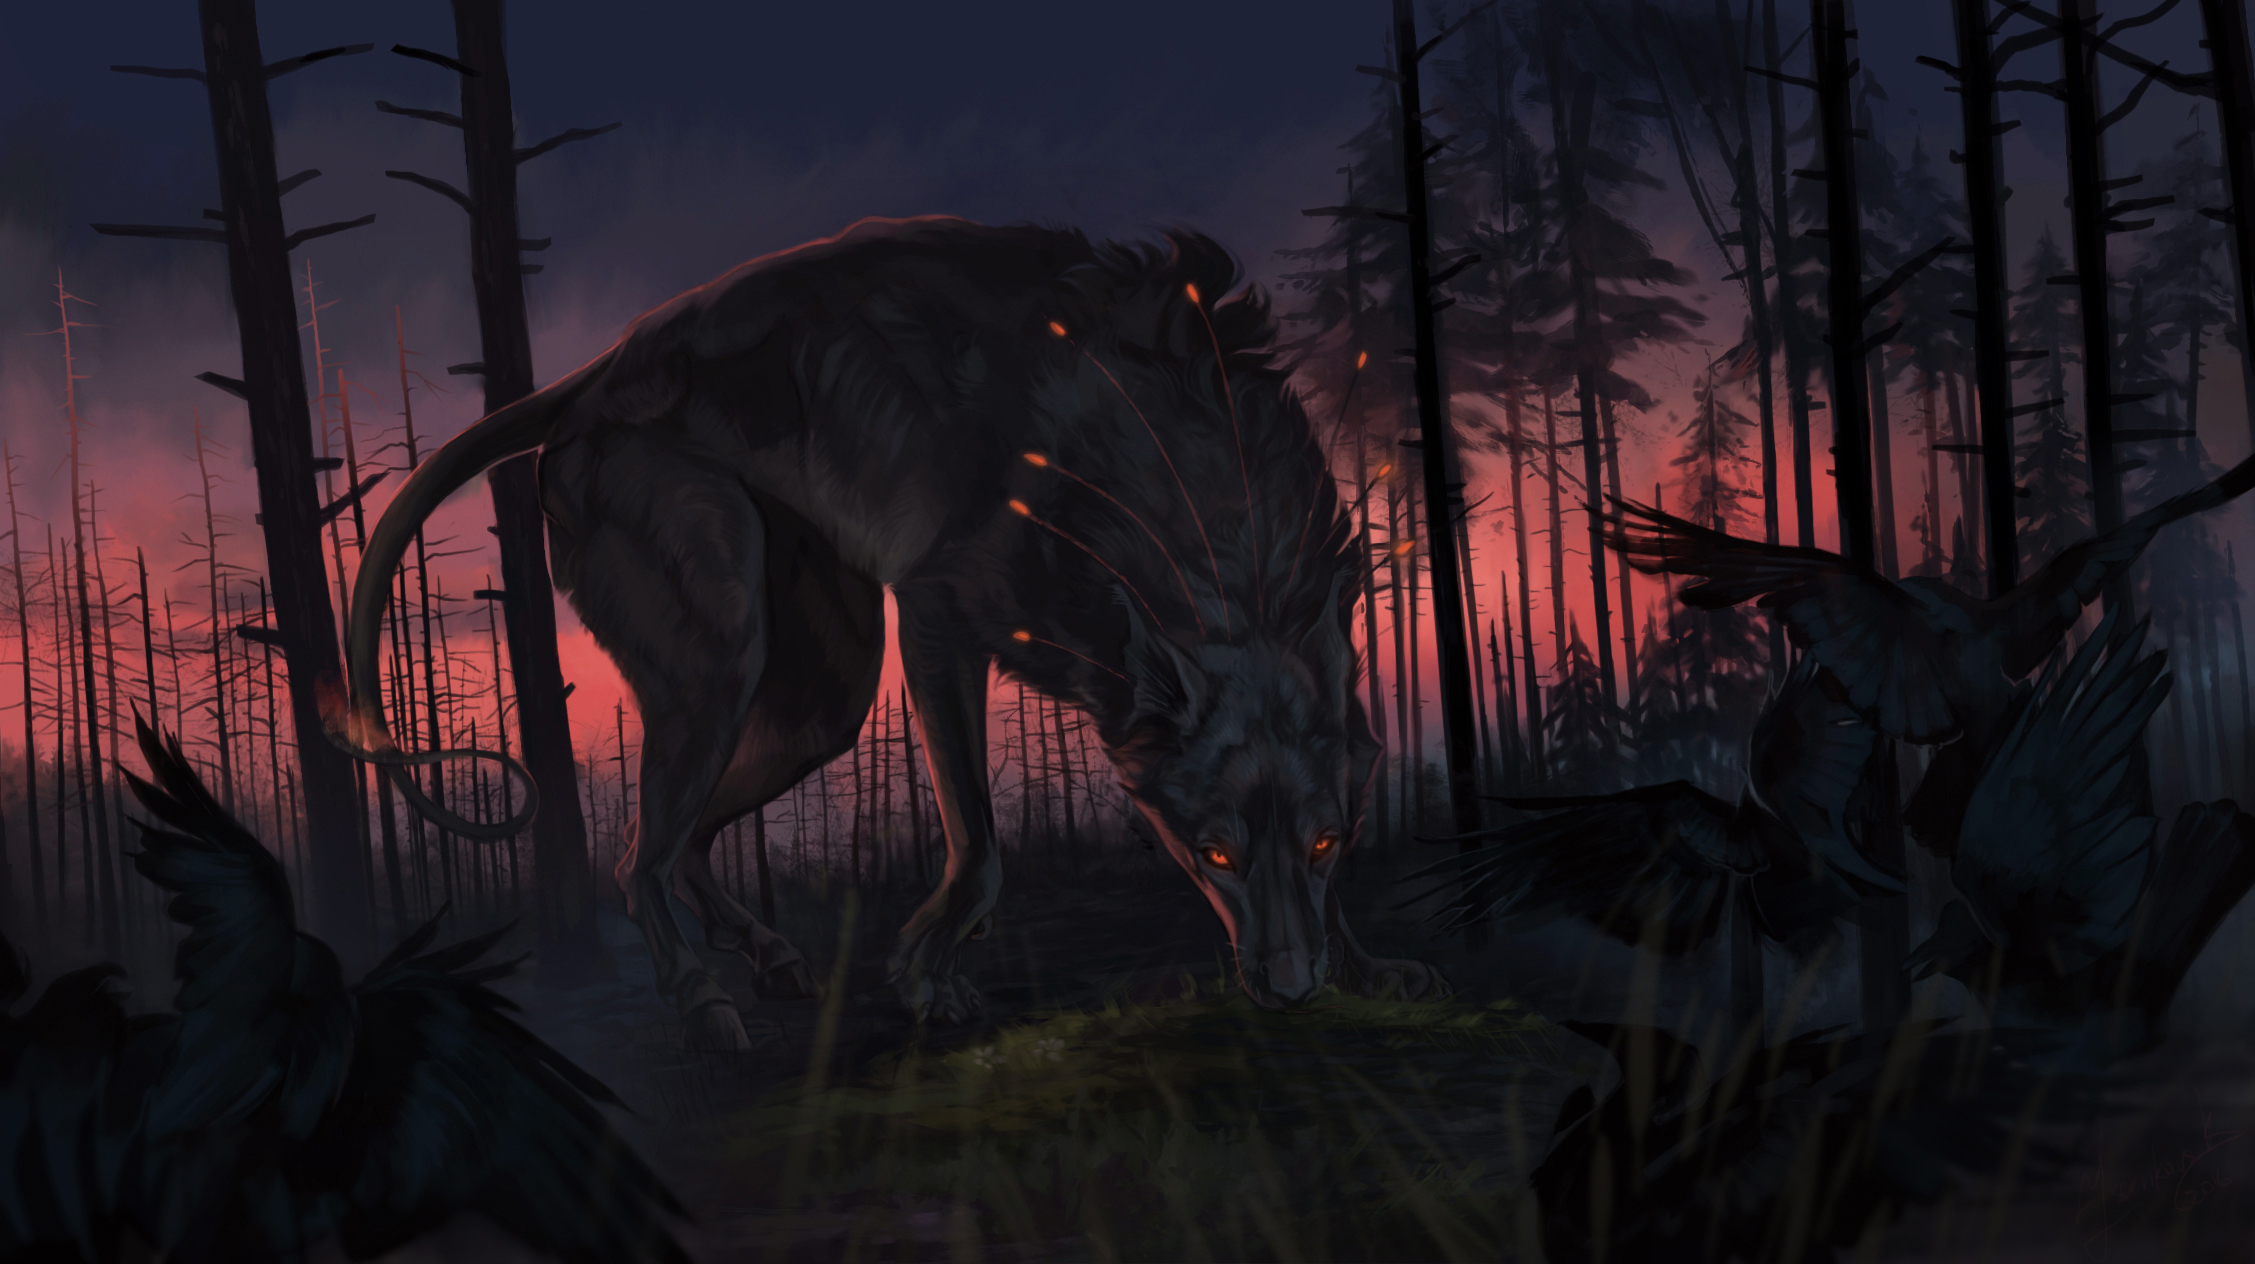 Wolf Fantasy, HD Artist, 4k Wallpaper, Image, Background, Photo